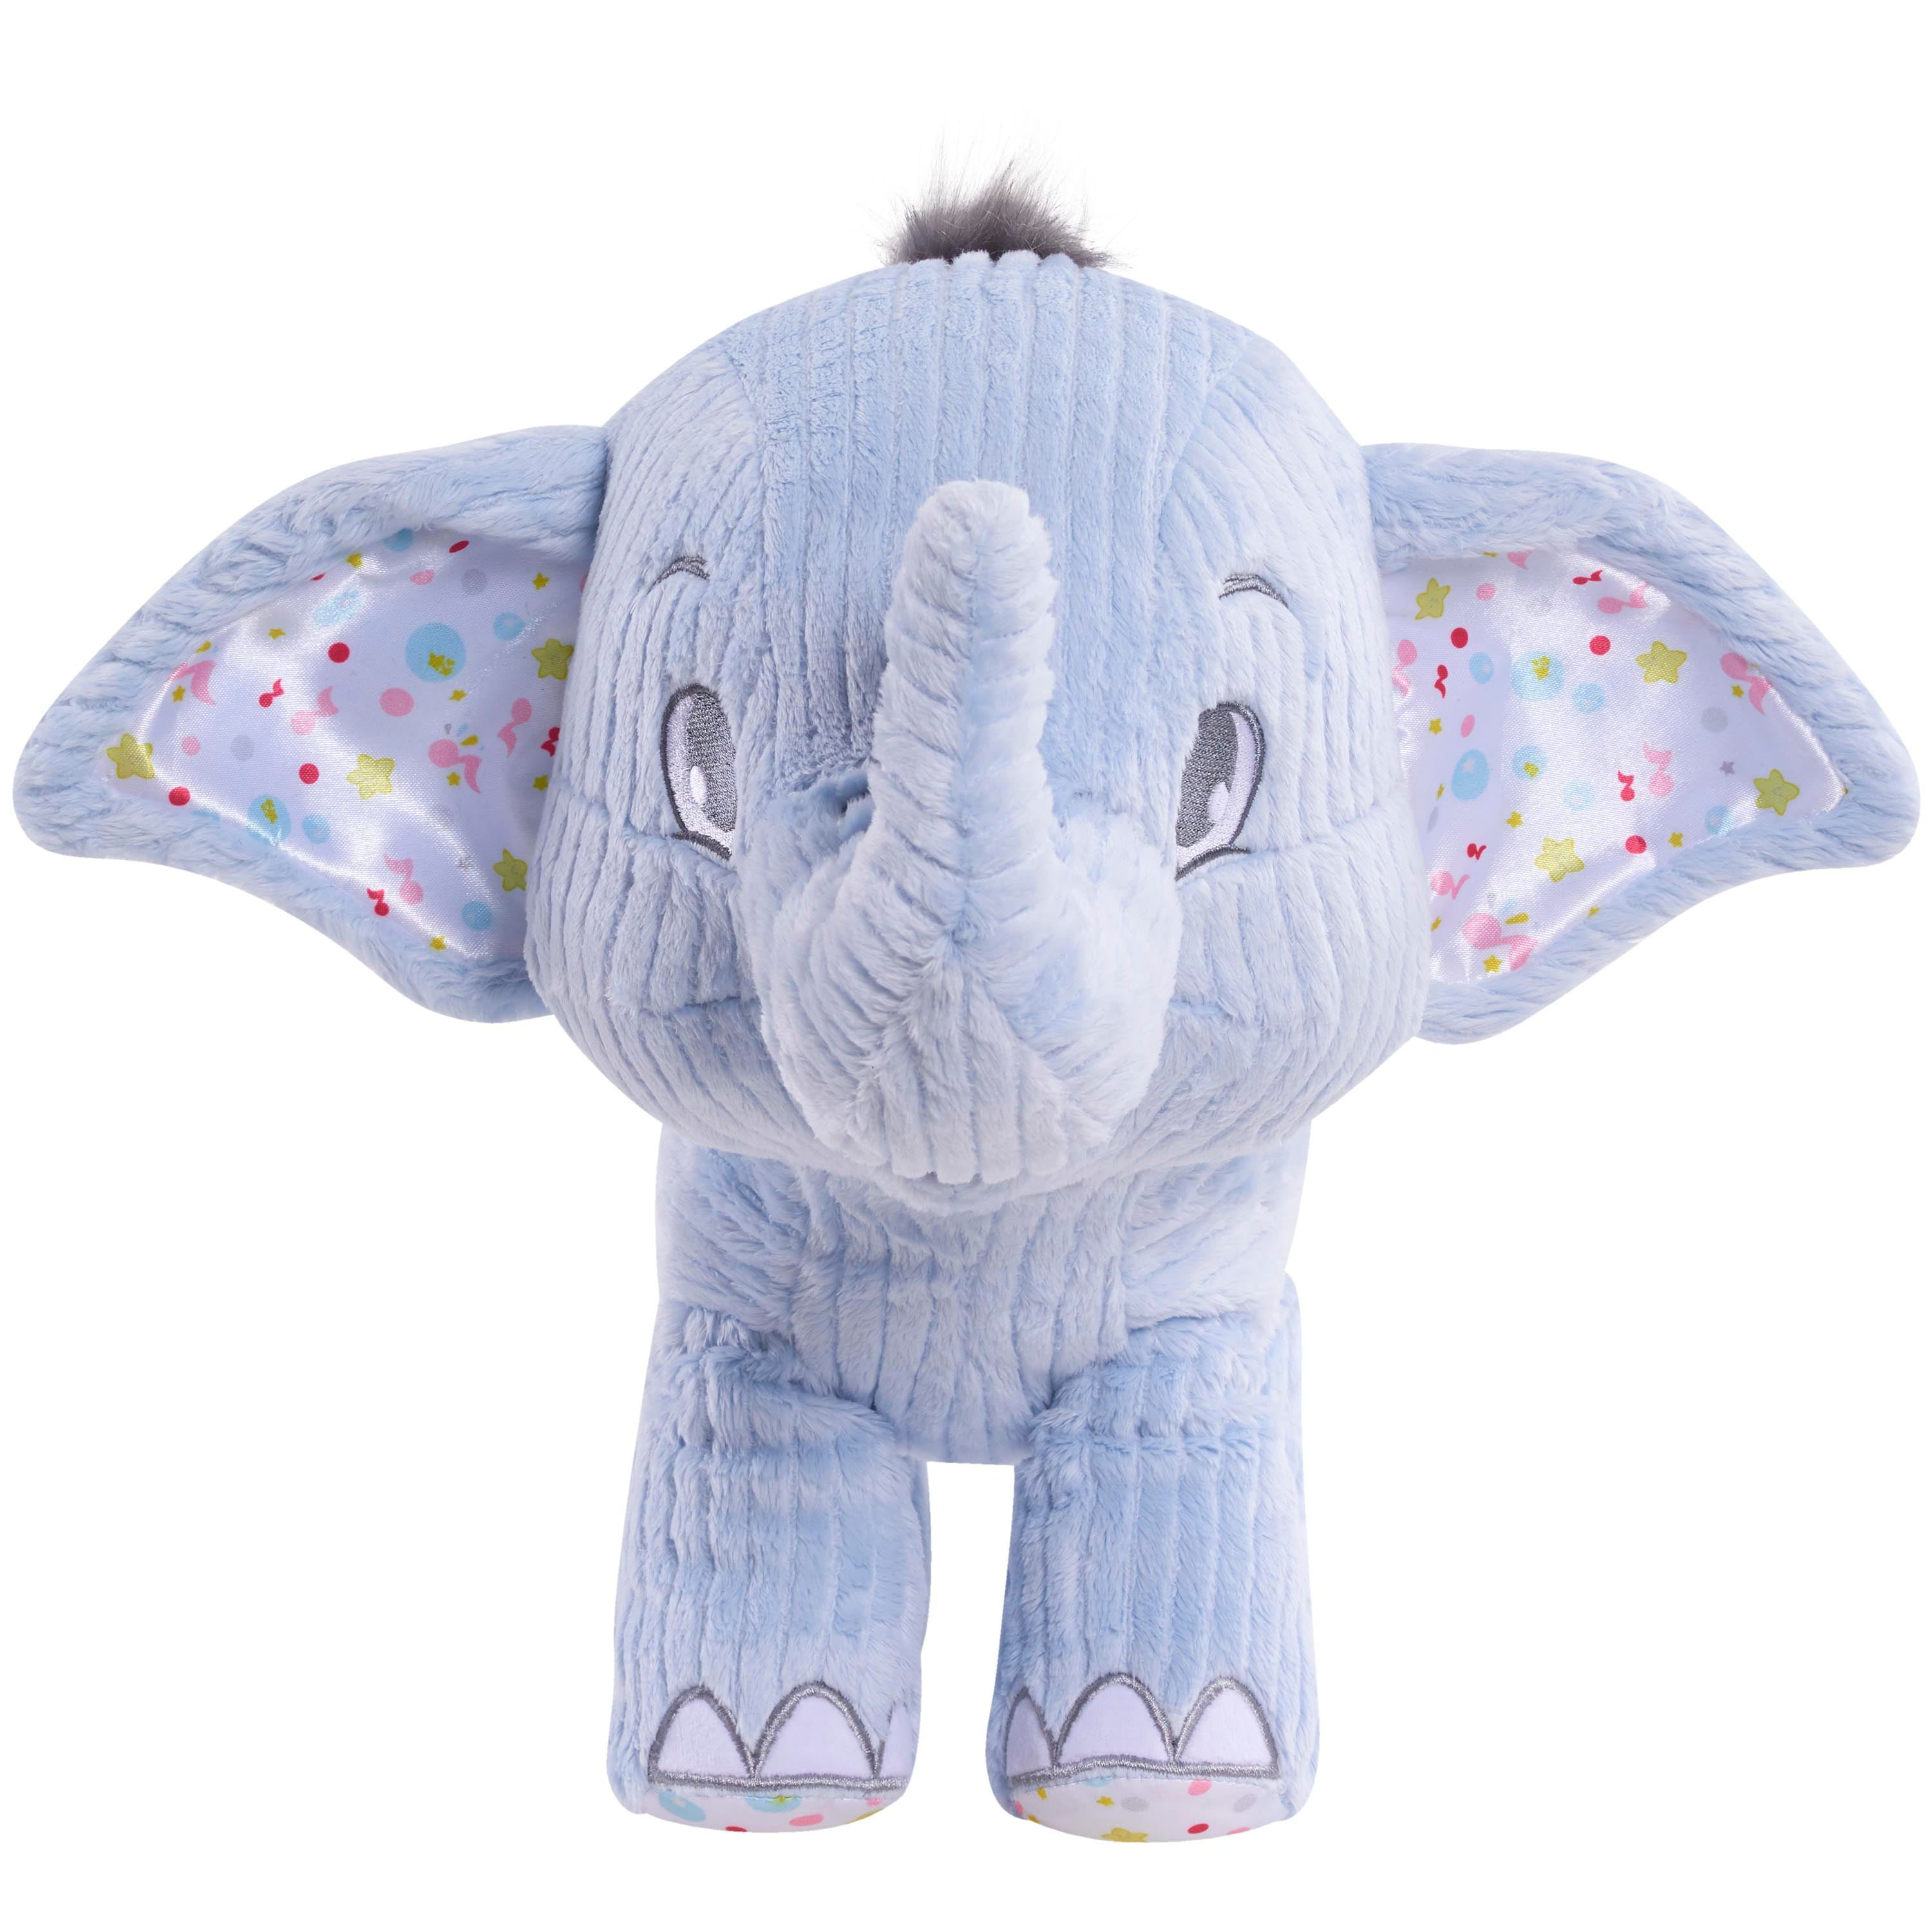 Elefantito Medium Plush with Sound Canticos Nickelodeon Little Elephant 